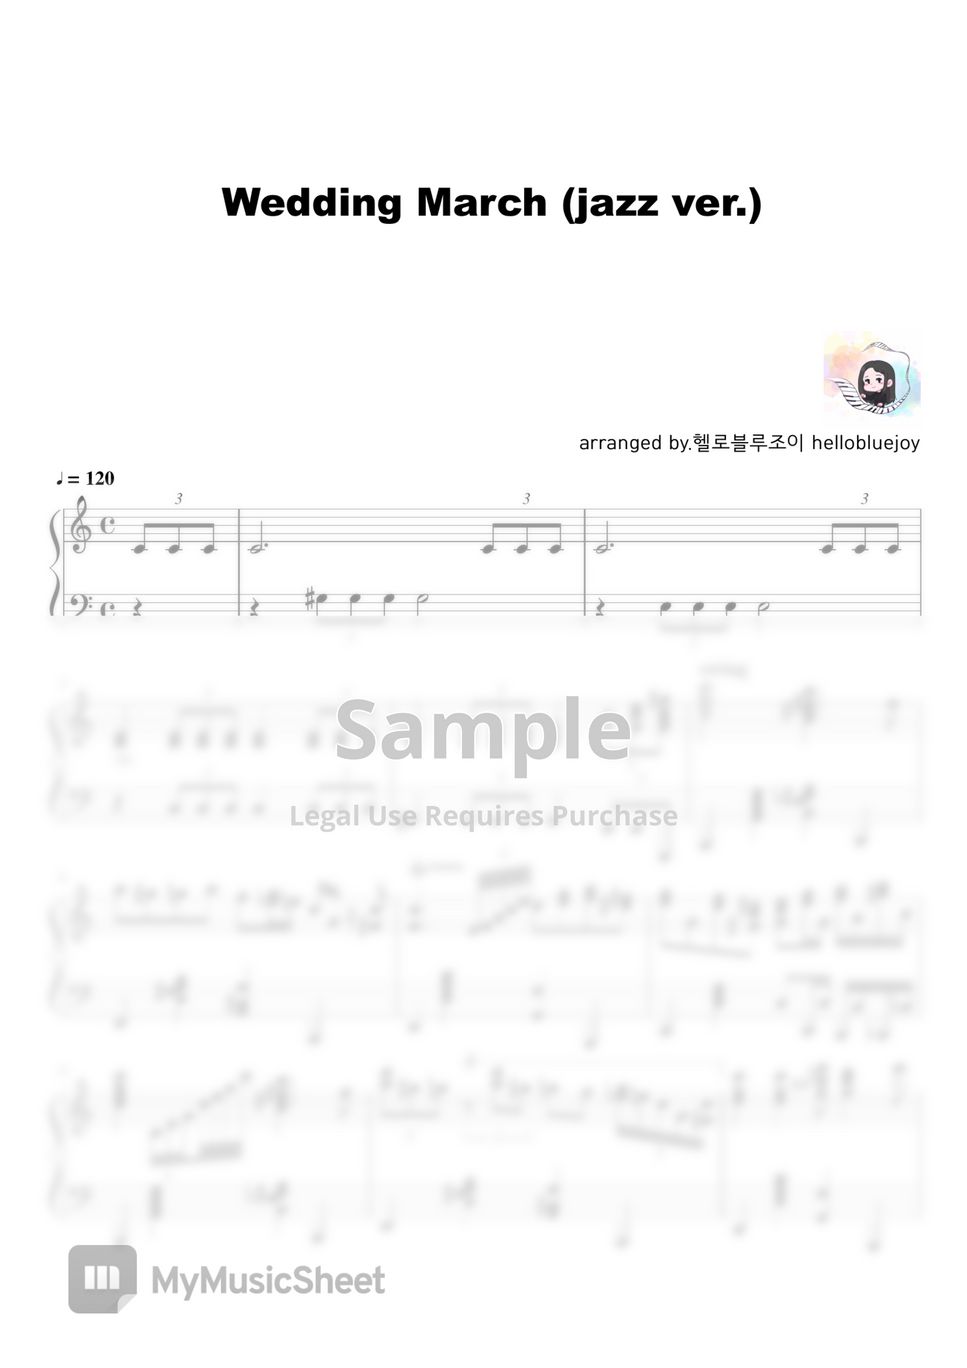 Mendelssohn - Wedding March (jazz ver.) by 헬로블루조이 hellobluejoy